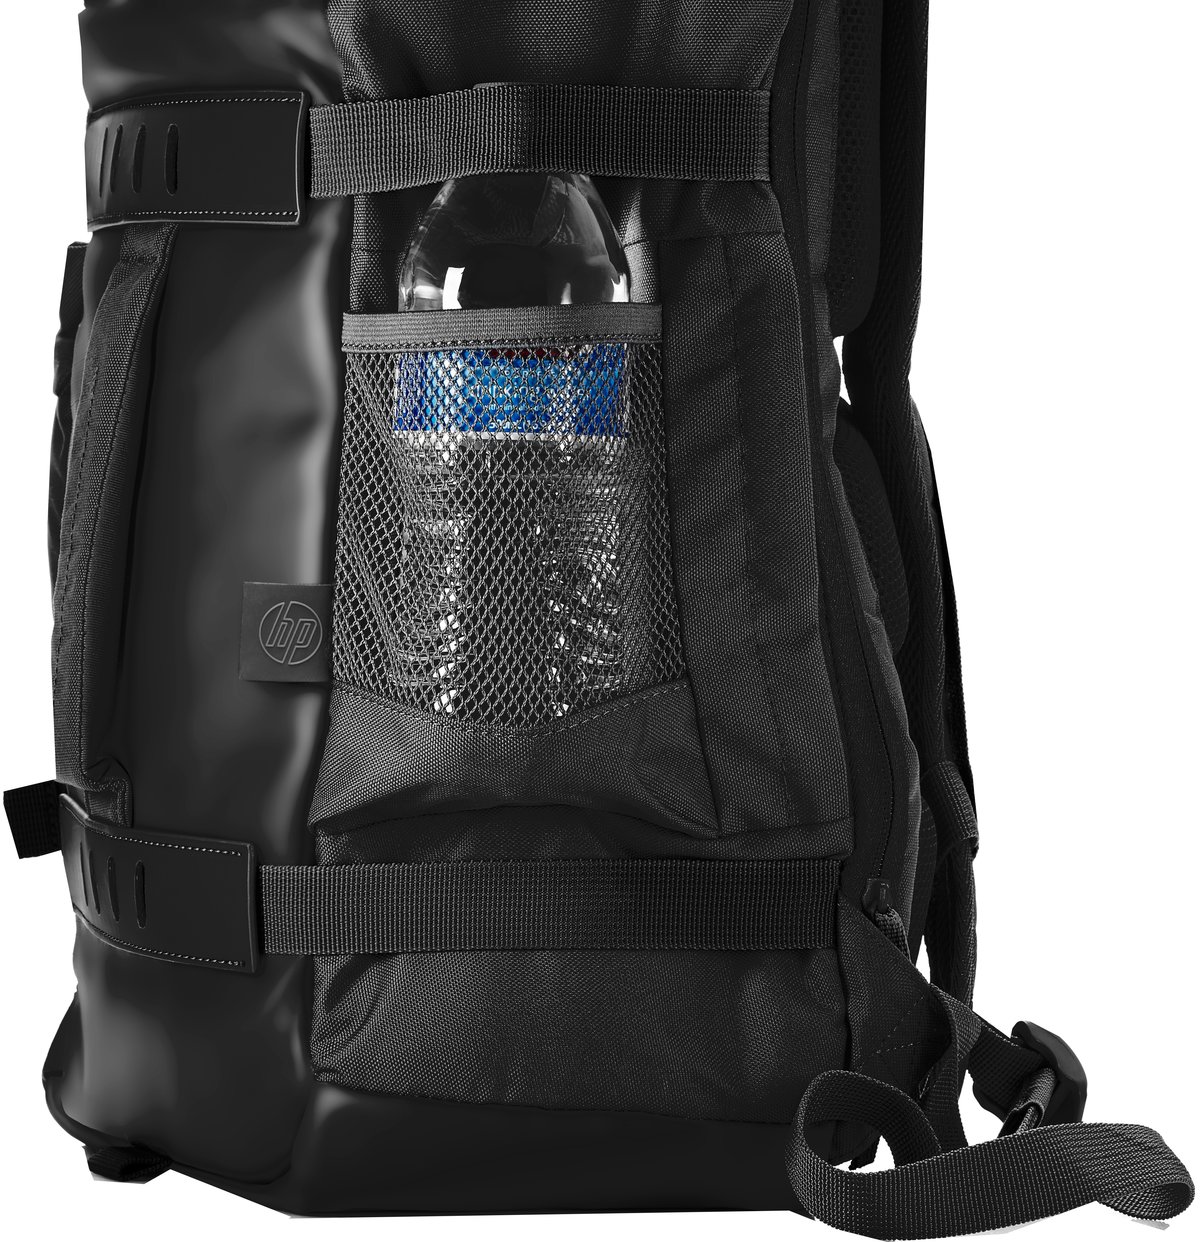 HP 15.6 Black Odyssey Backpack